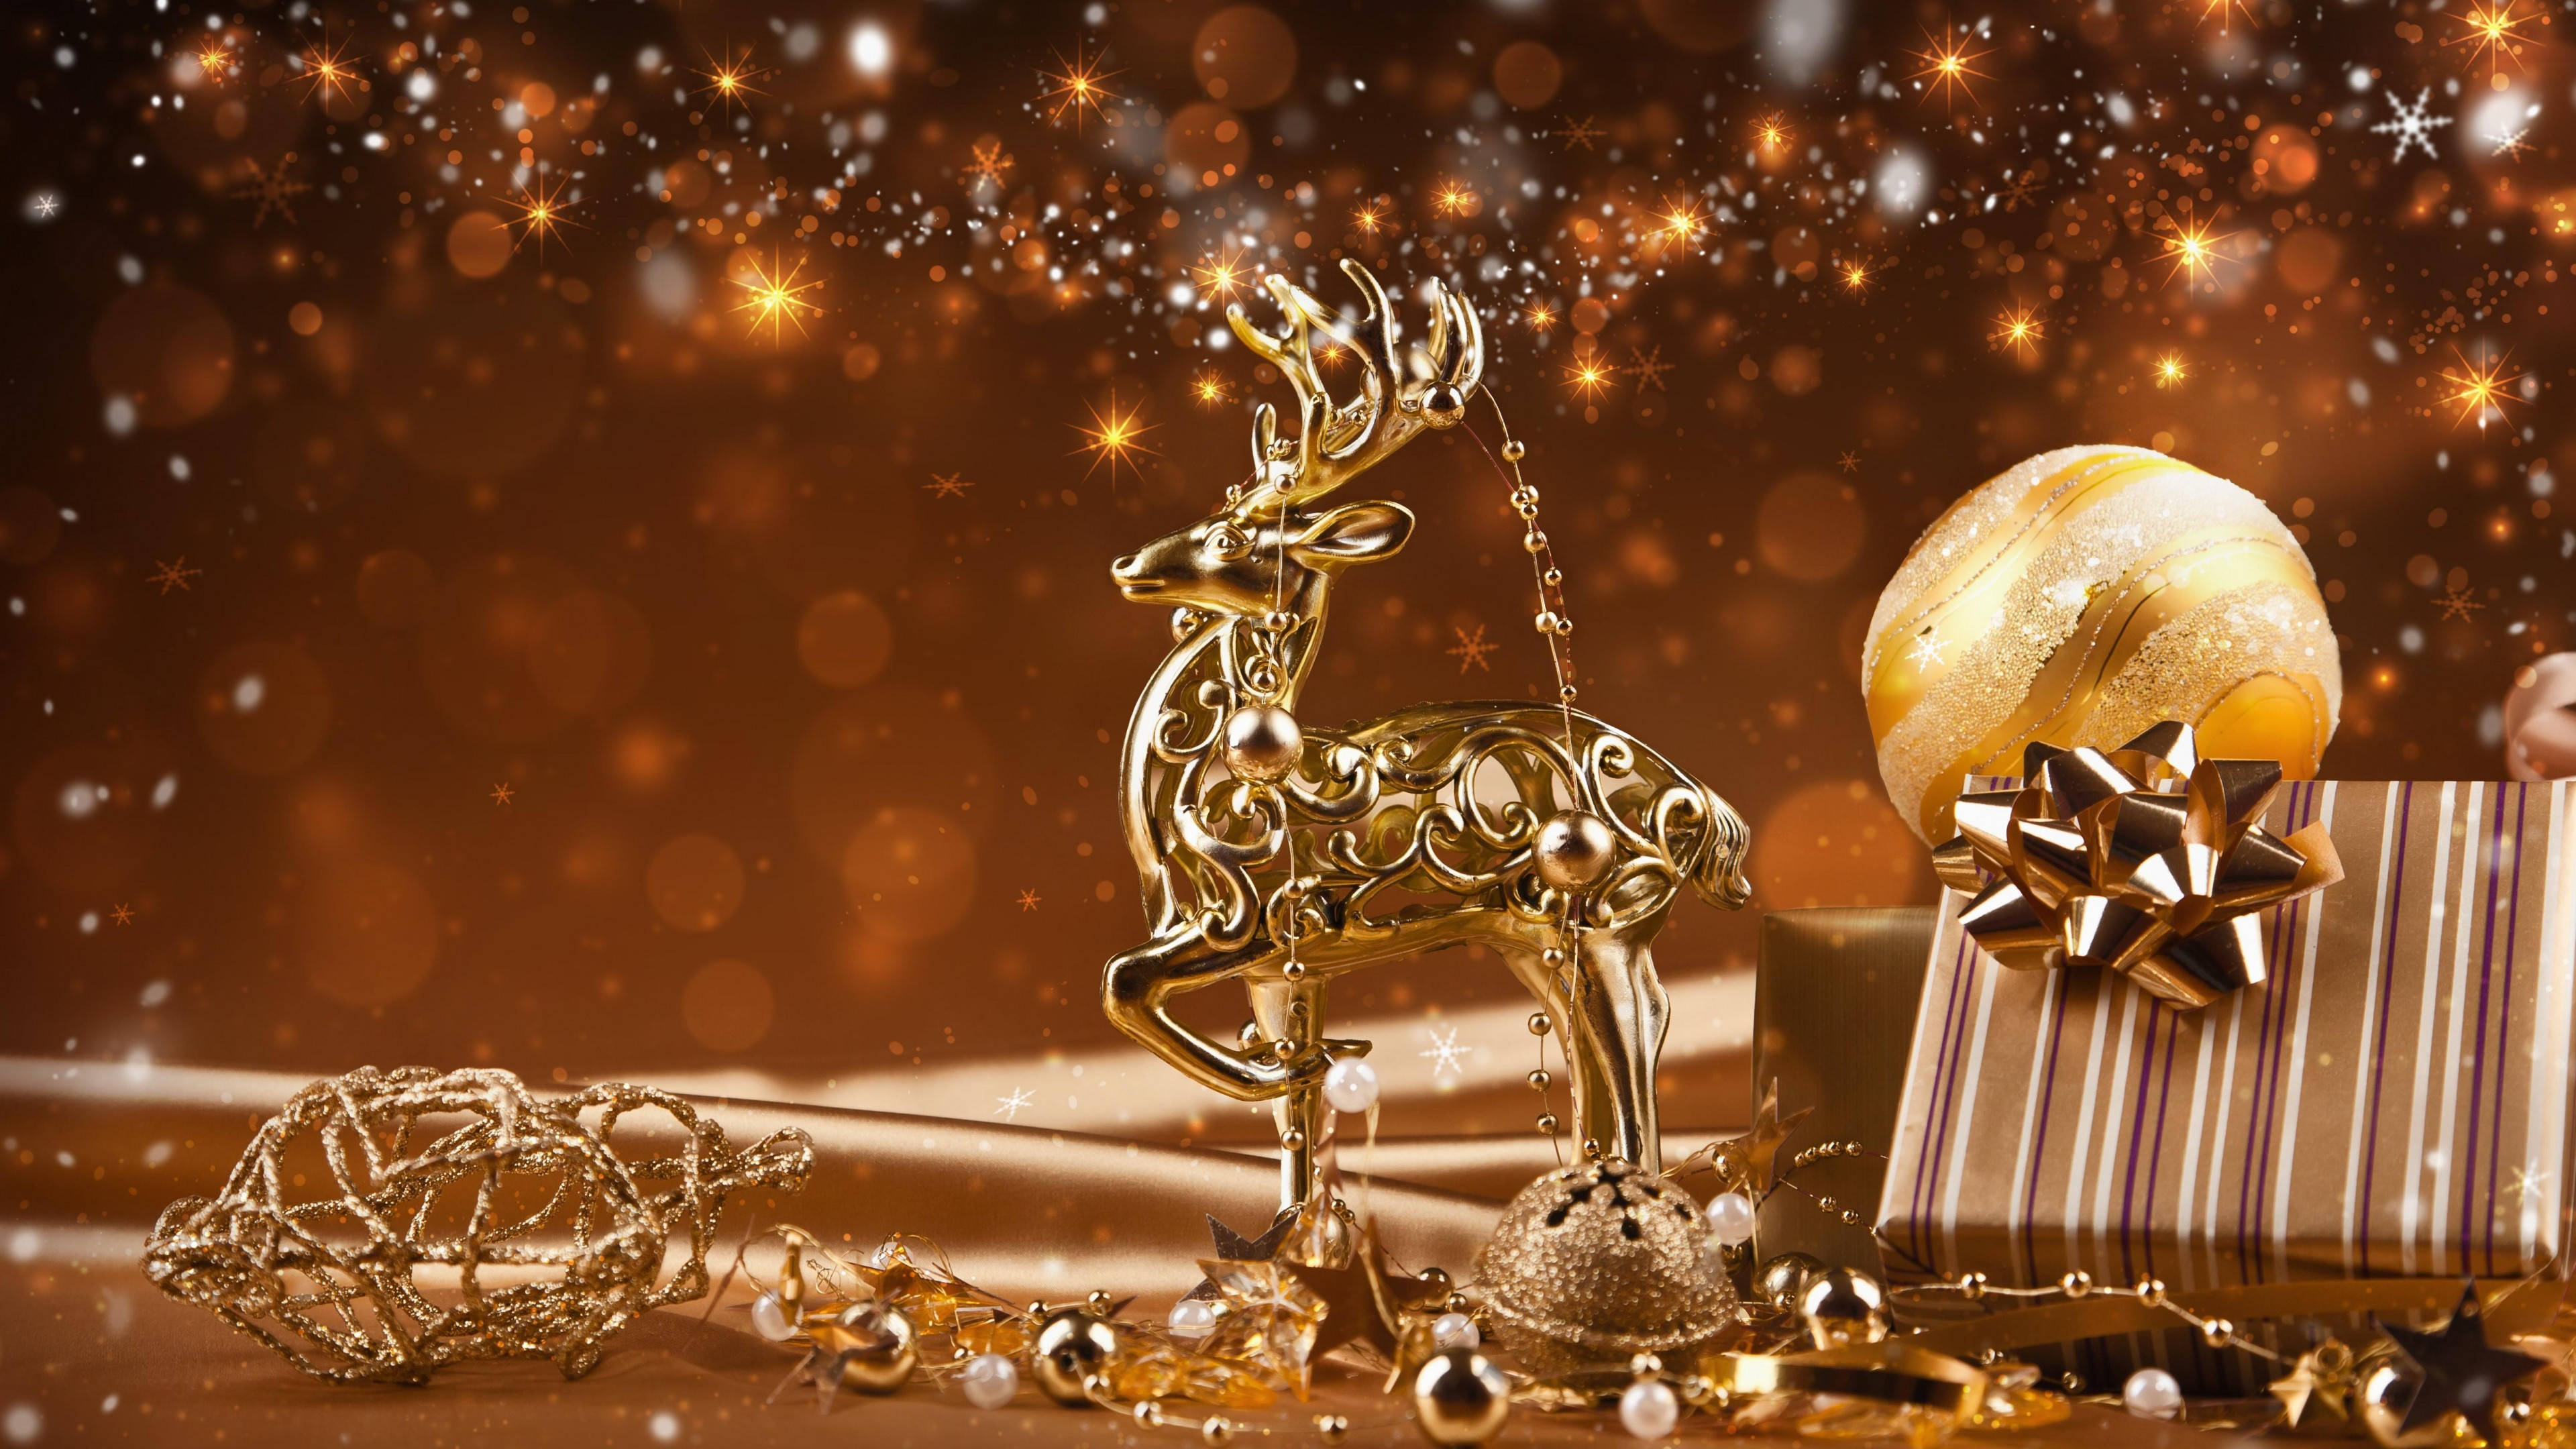 Glittering Cool Gold Christmas Desktop Wallpaper